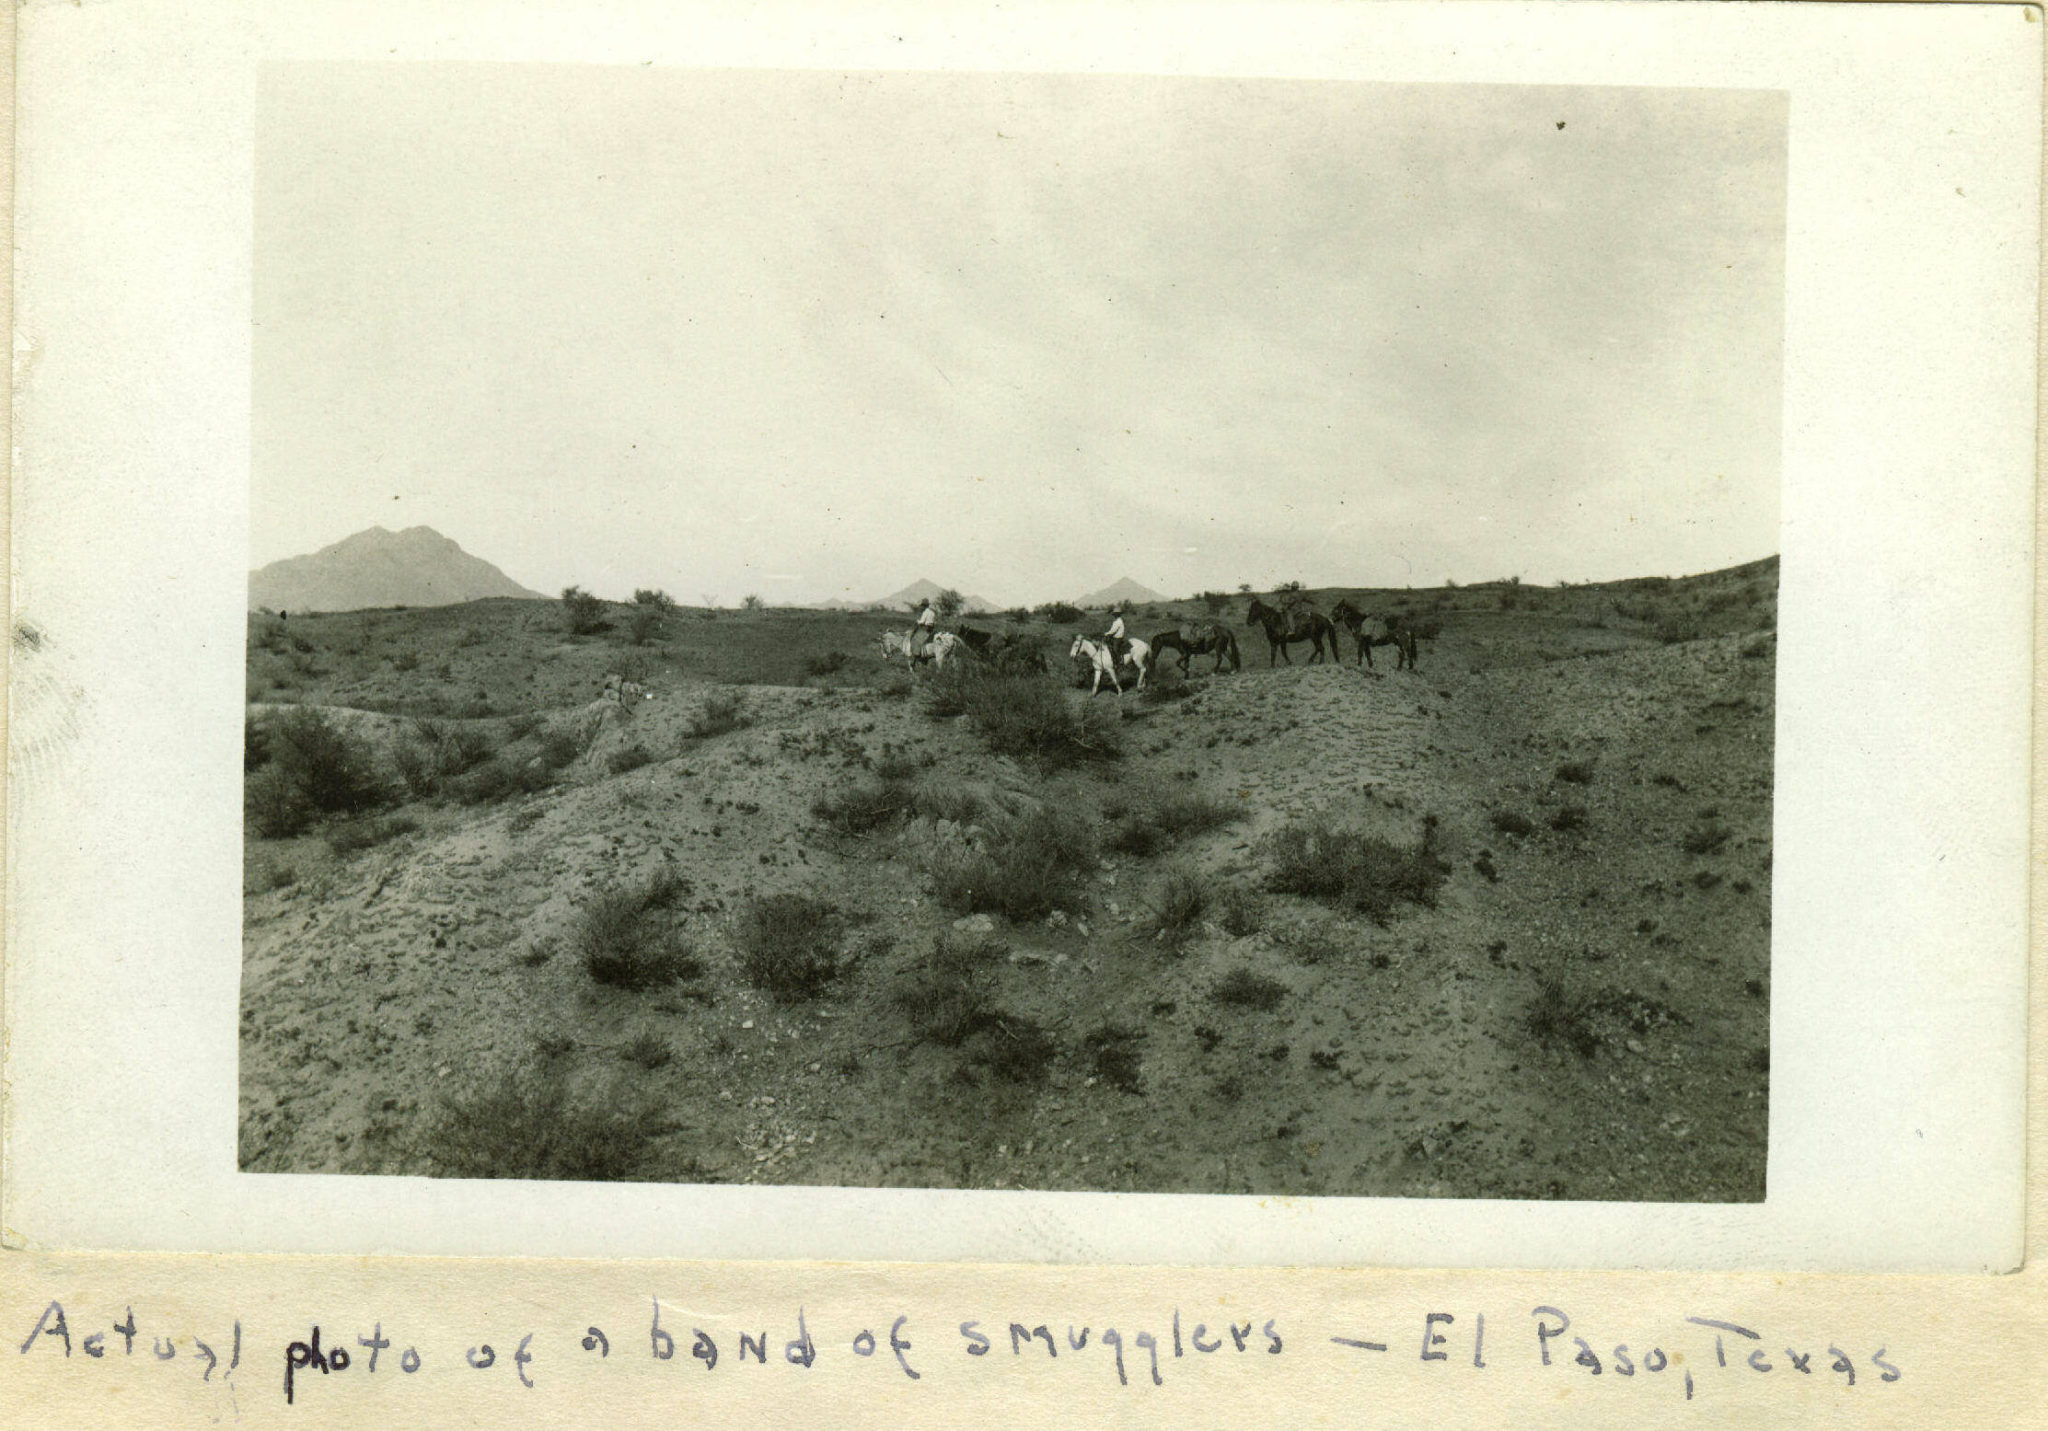 Actual photo of a band of booze smugglers - El Paso, Texas